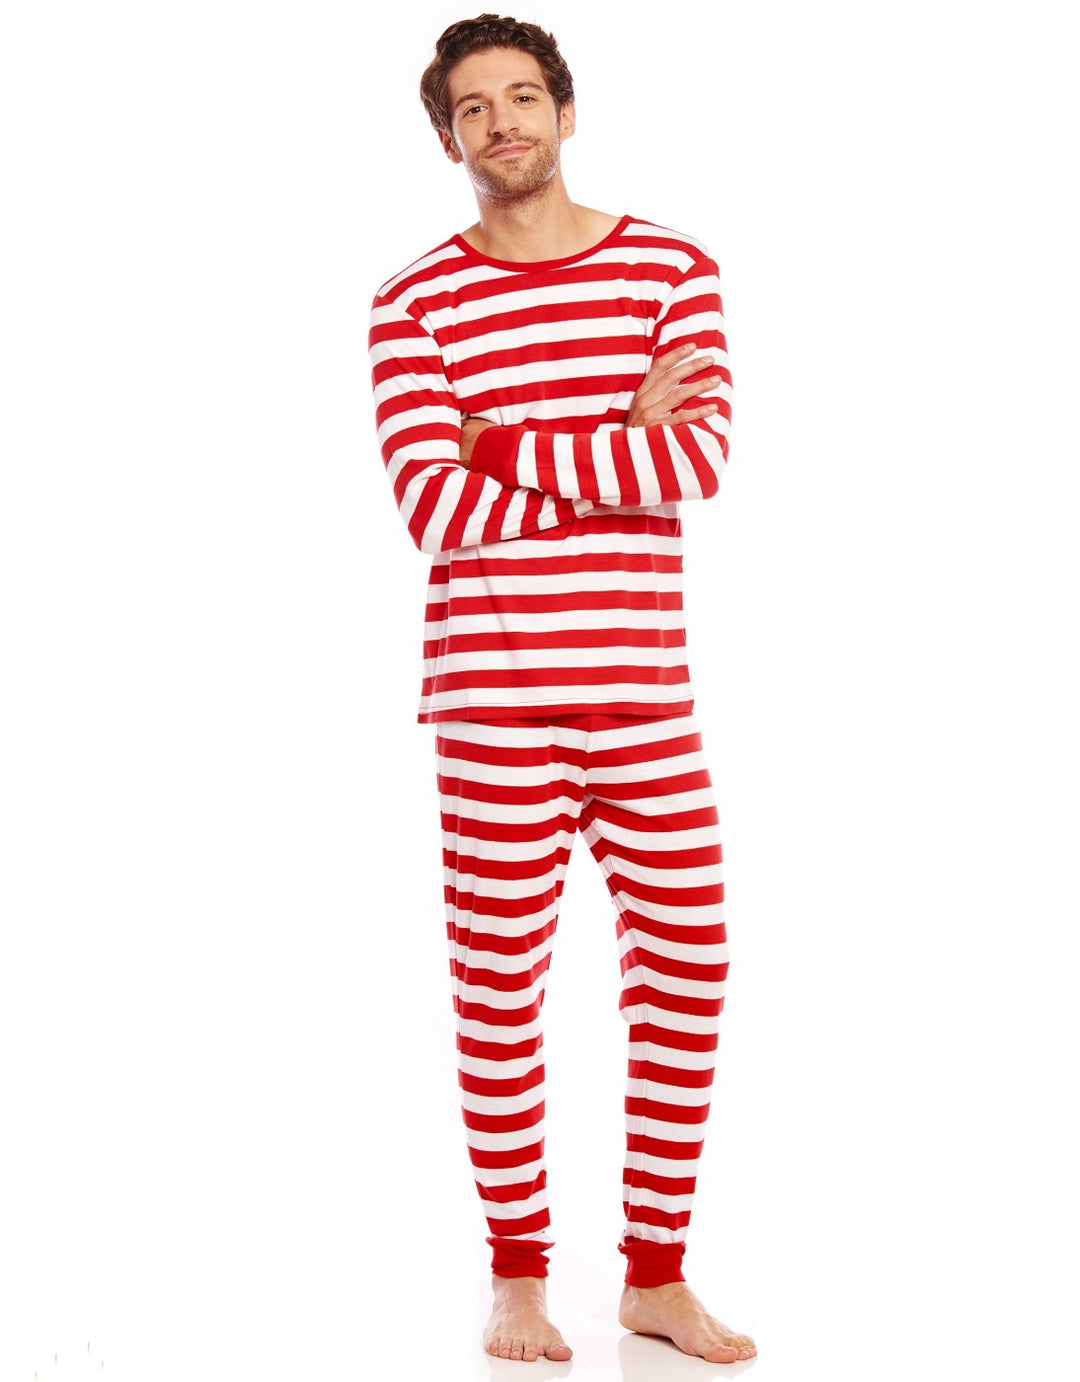 red and white striped men's cotton pajamas